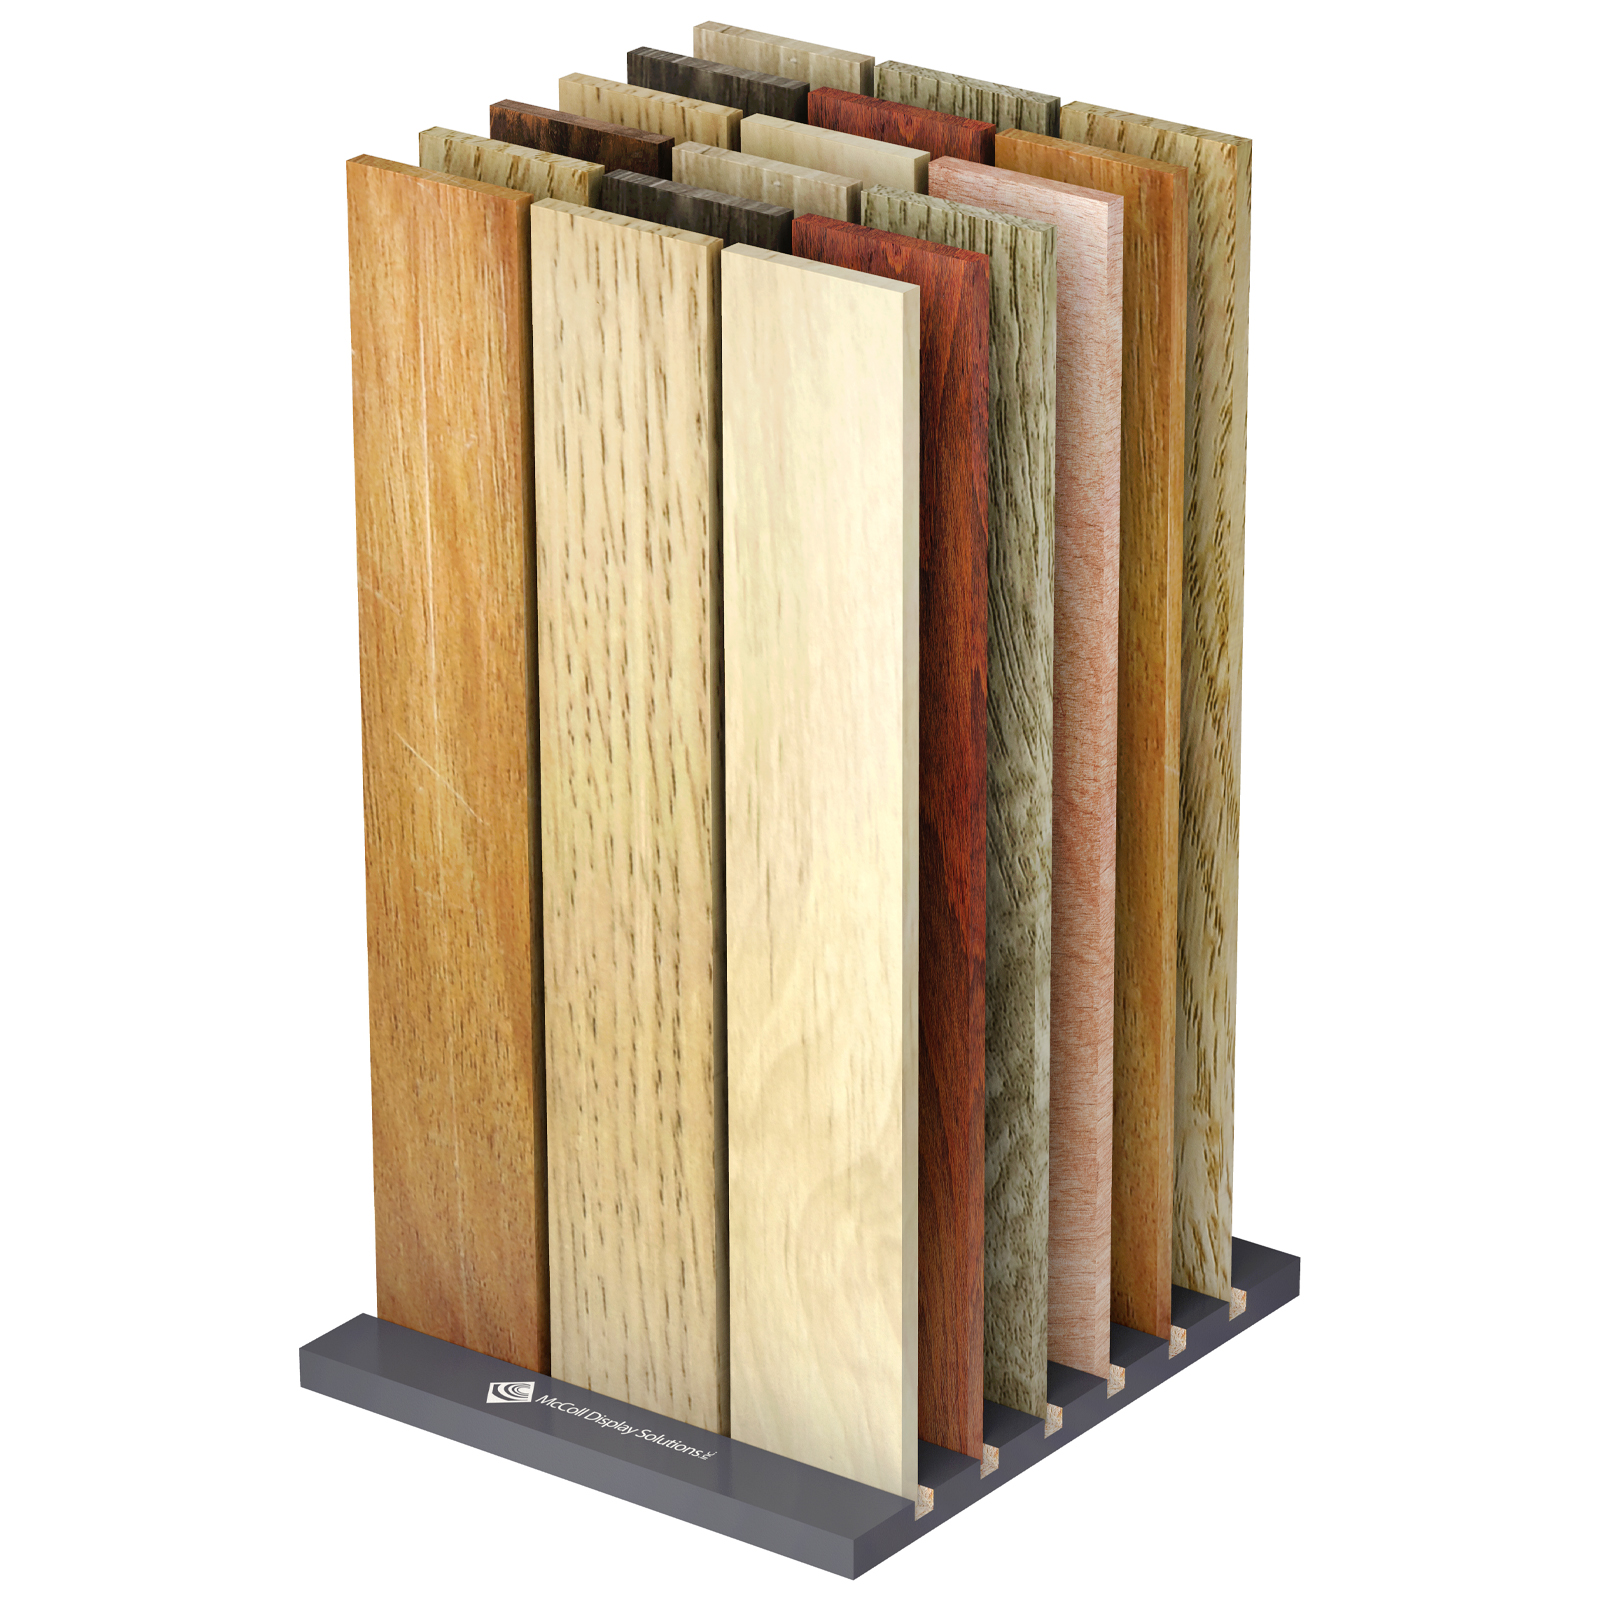 Floor Slab Samples Wood Hardwood Laminate Bamboo Reclaimed Plank Flooring Customize Showroom Displays Low-Cost McColl Display